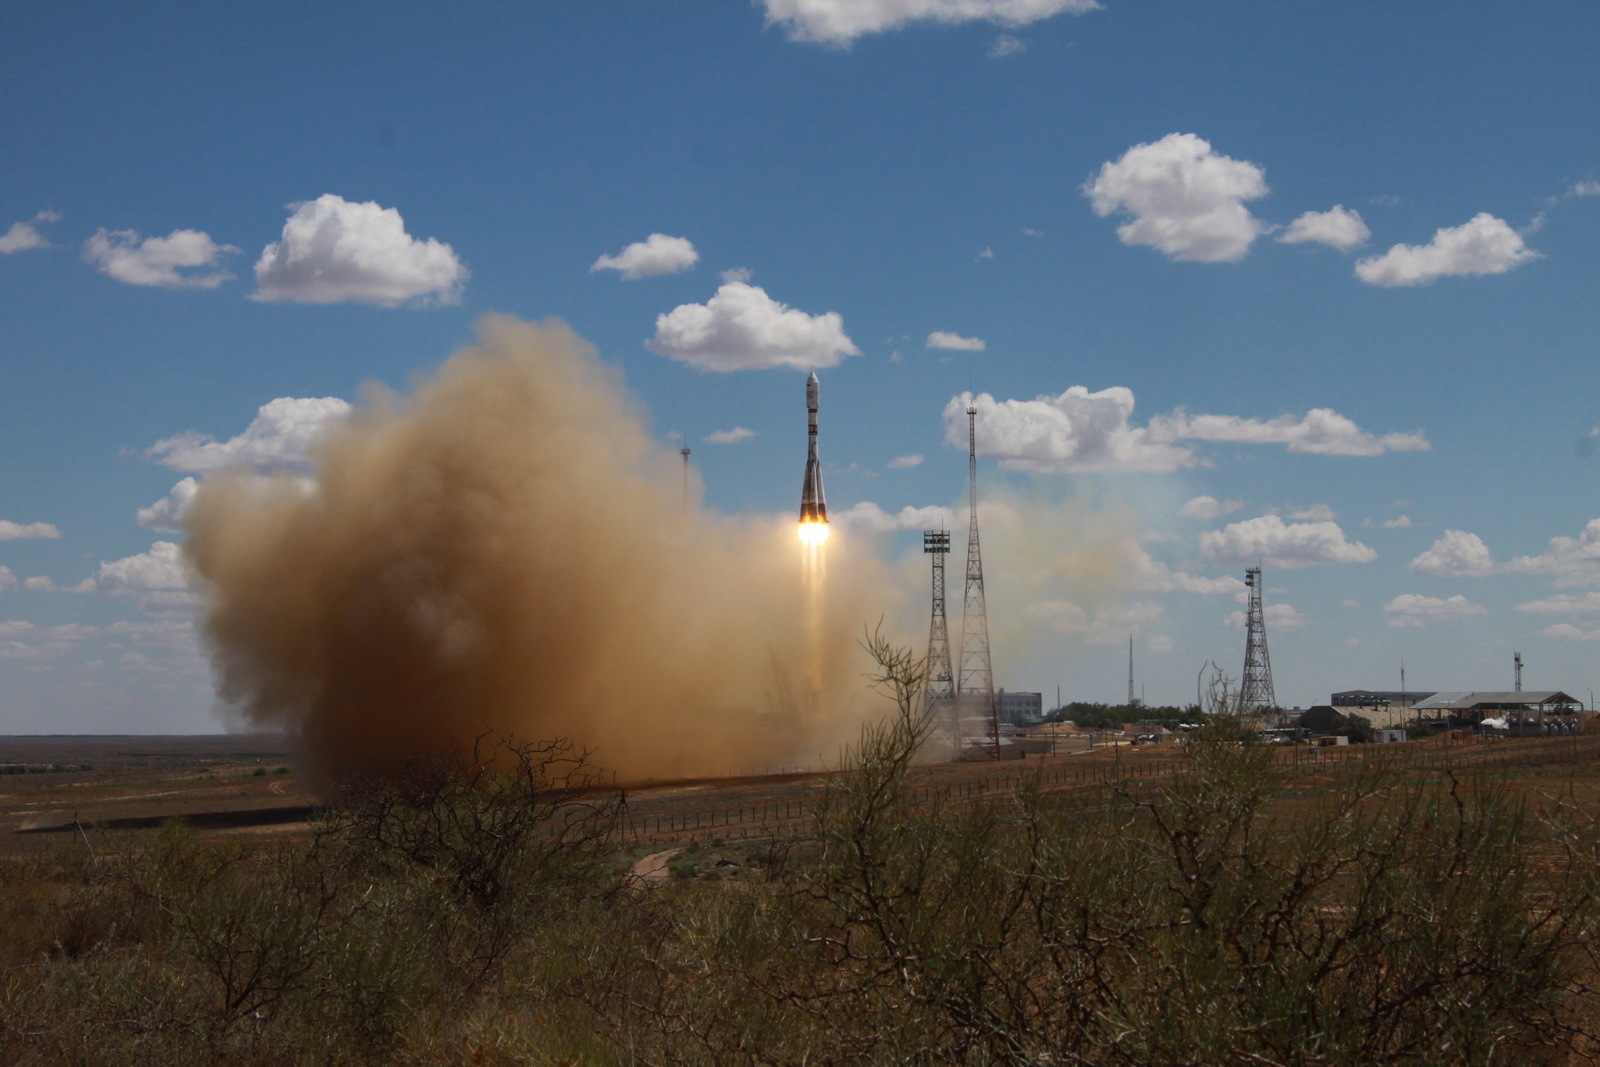 Launch of Soyuz 2.1a launch vehicle with 73 satellites - Space, Union, Rocket, Start, Baikonur, Video, Longpost